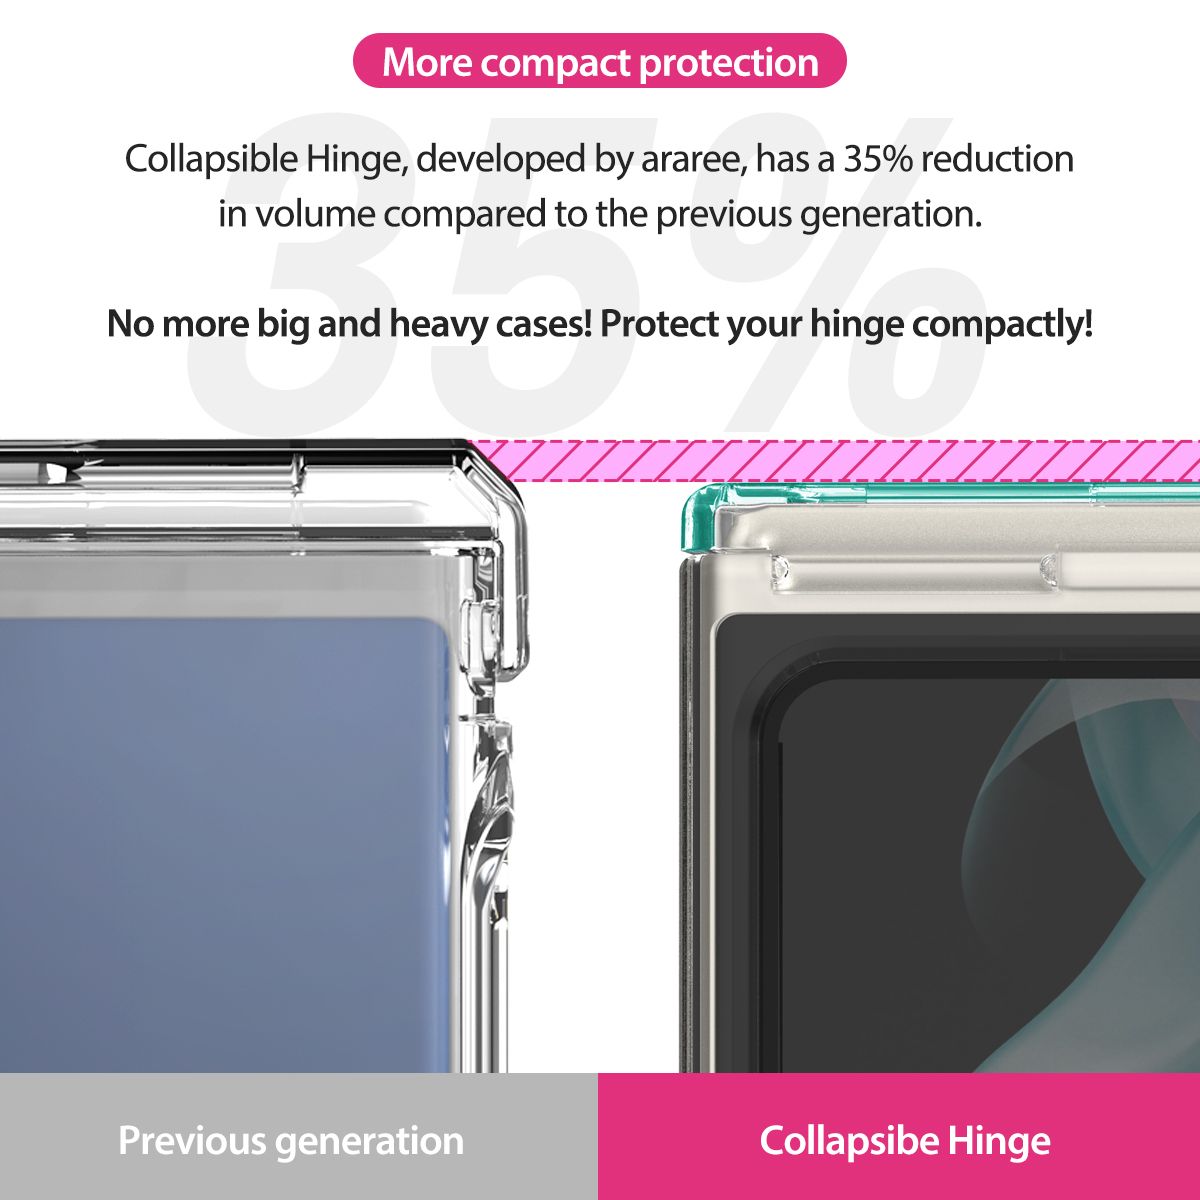 Araree รุ่น Nukin 360 - เคส Galaxy Z Flip 5 - สี Clear Matt